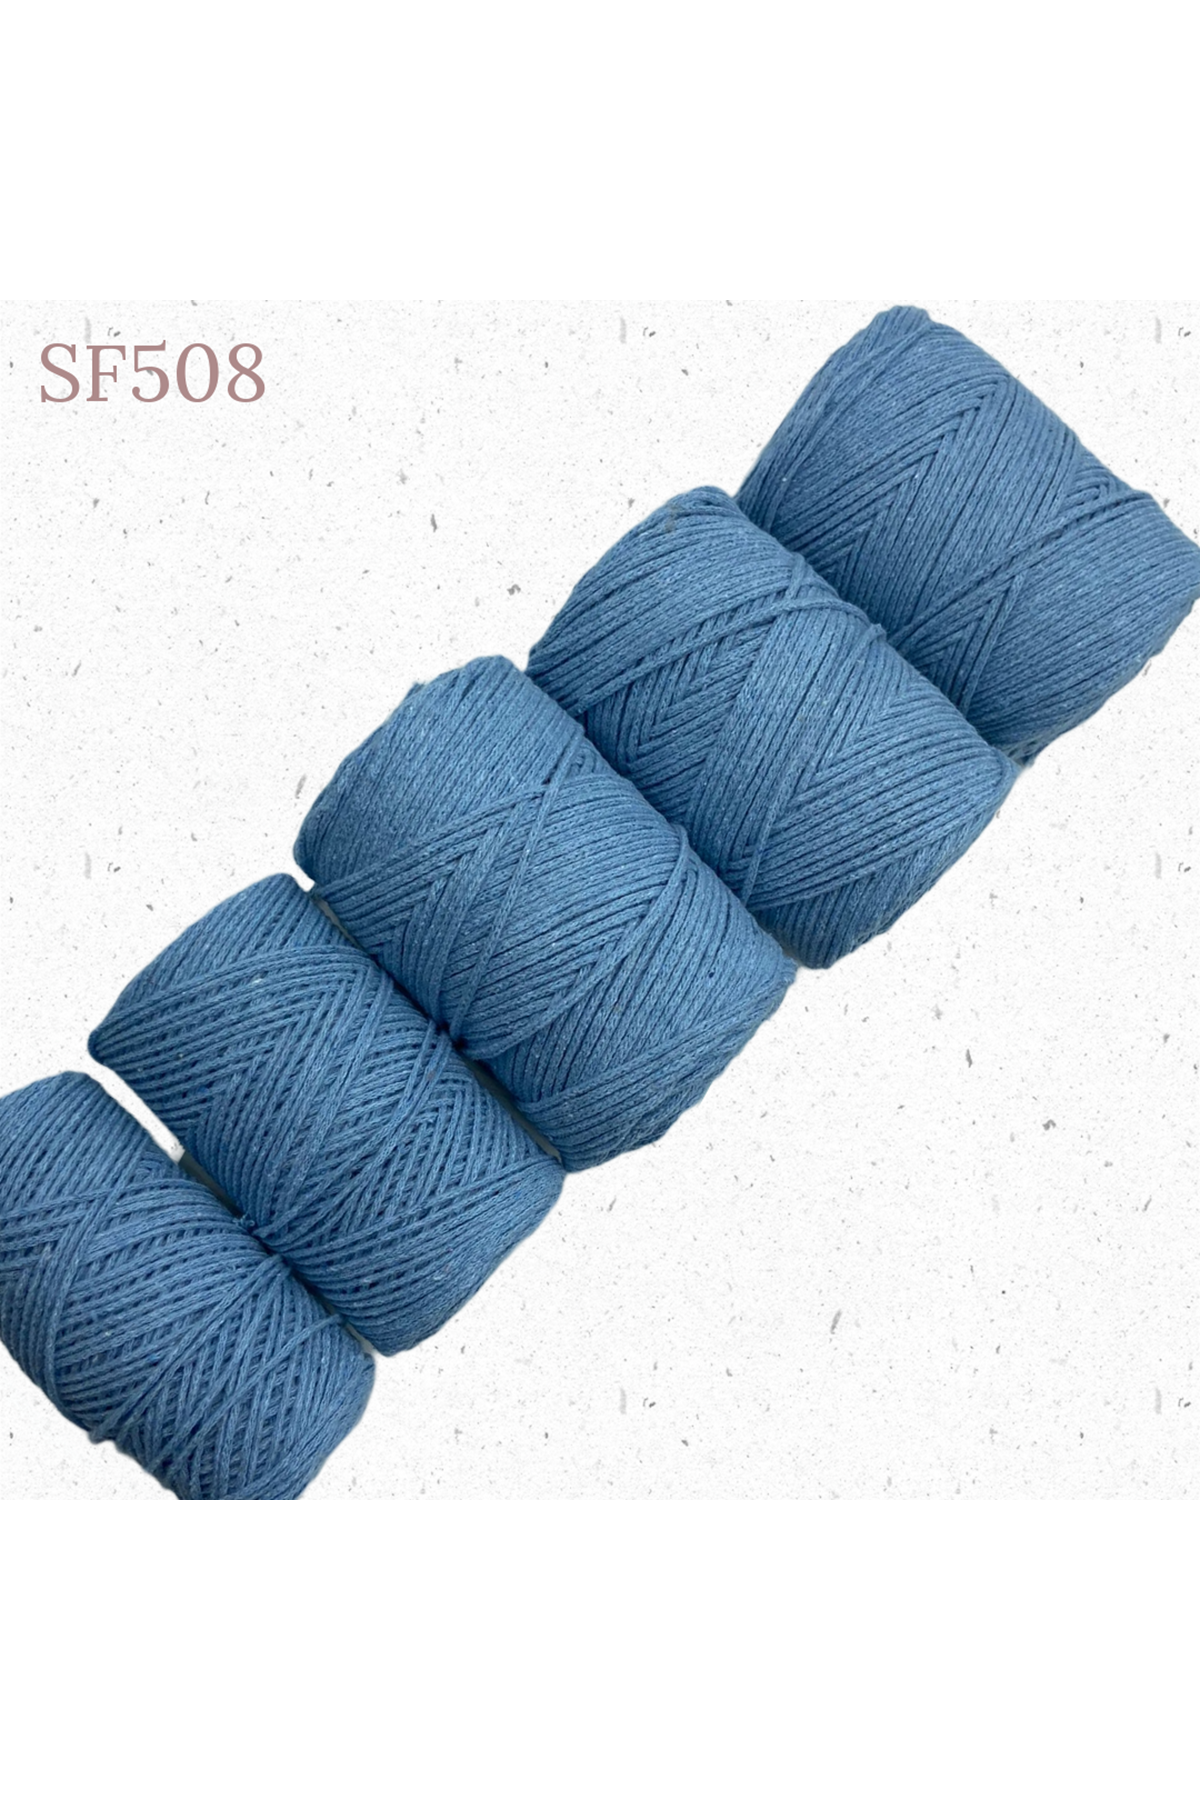 Stok Fazlası Cotton Makrome Mix 850 Gram SF508